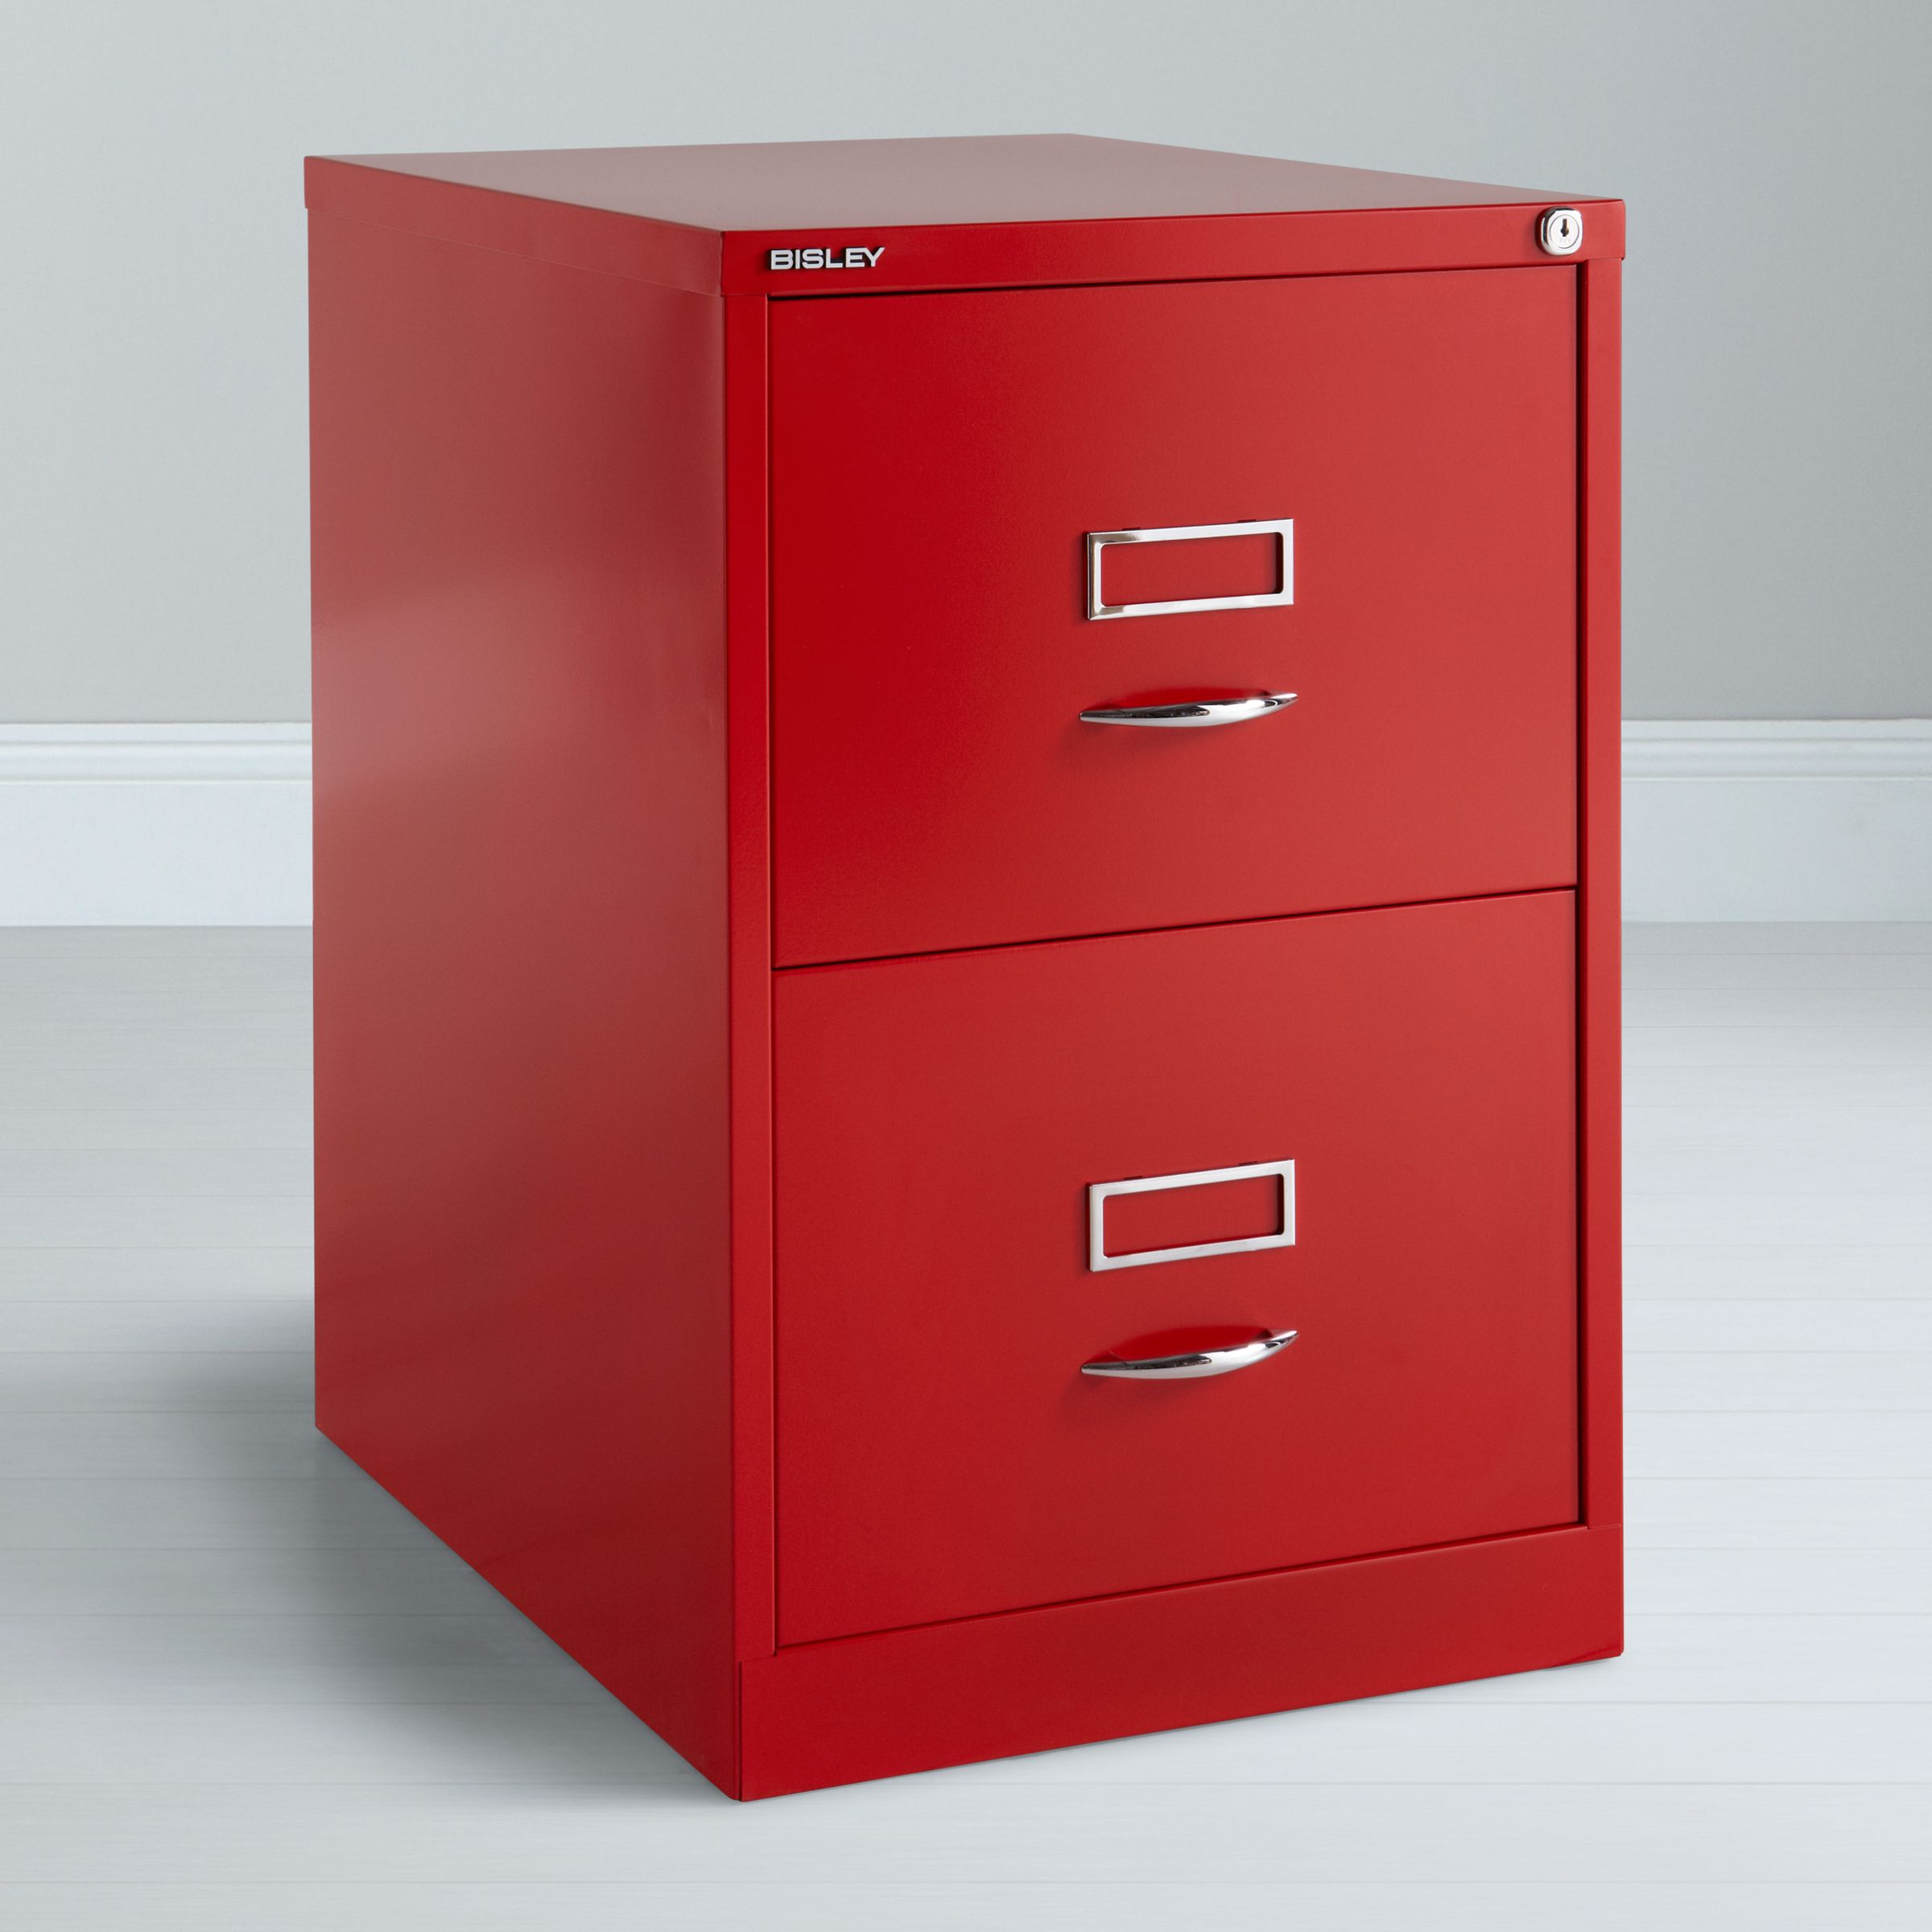 Bisley 2 Drawer Filing Cabinet, Red, width 47cm